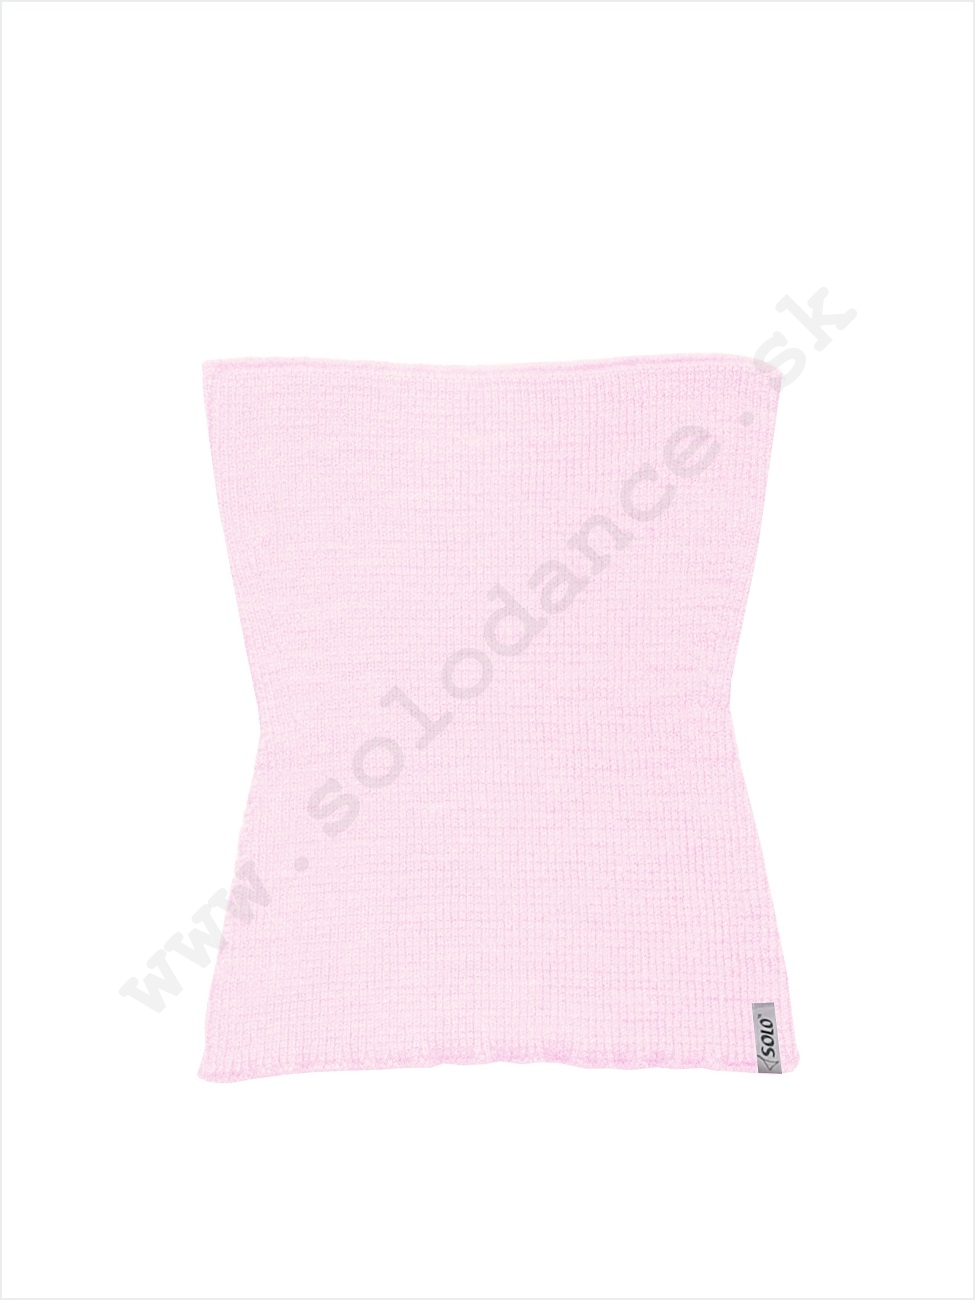 Body warmer for rhythmic gymnastics SOLO PS4 light pink size 140-170